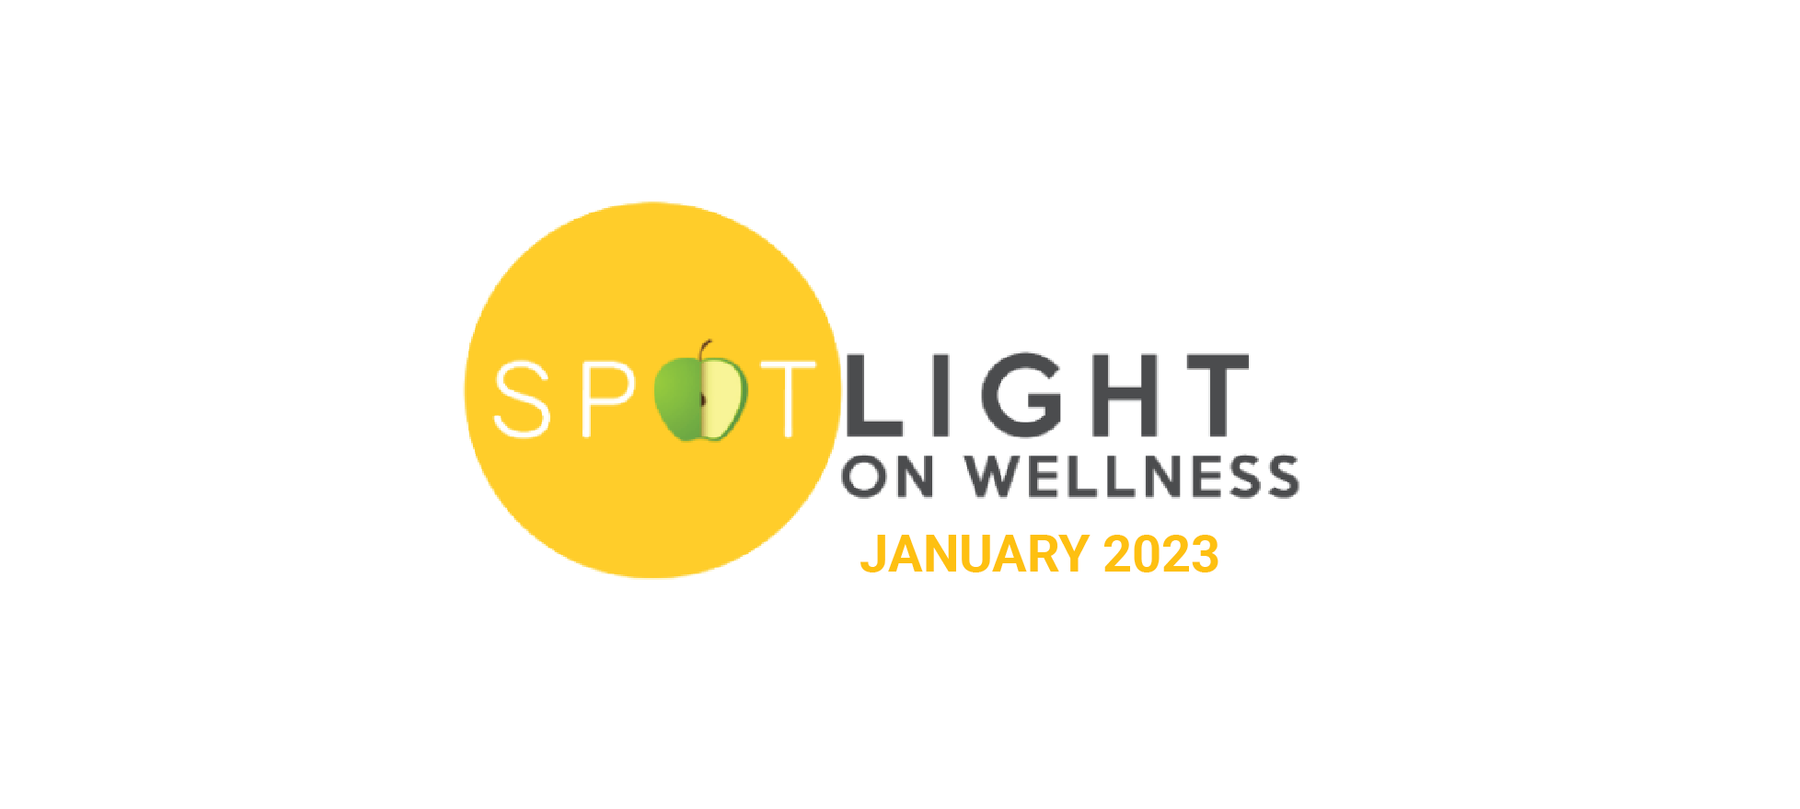 Spotlight on Wellness January 2023